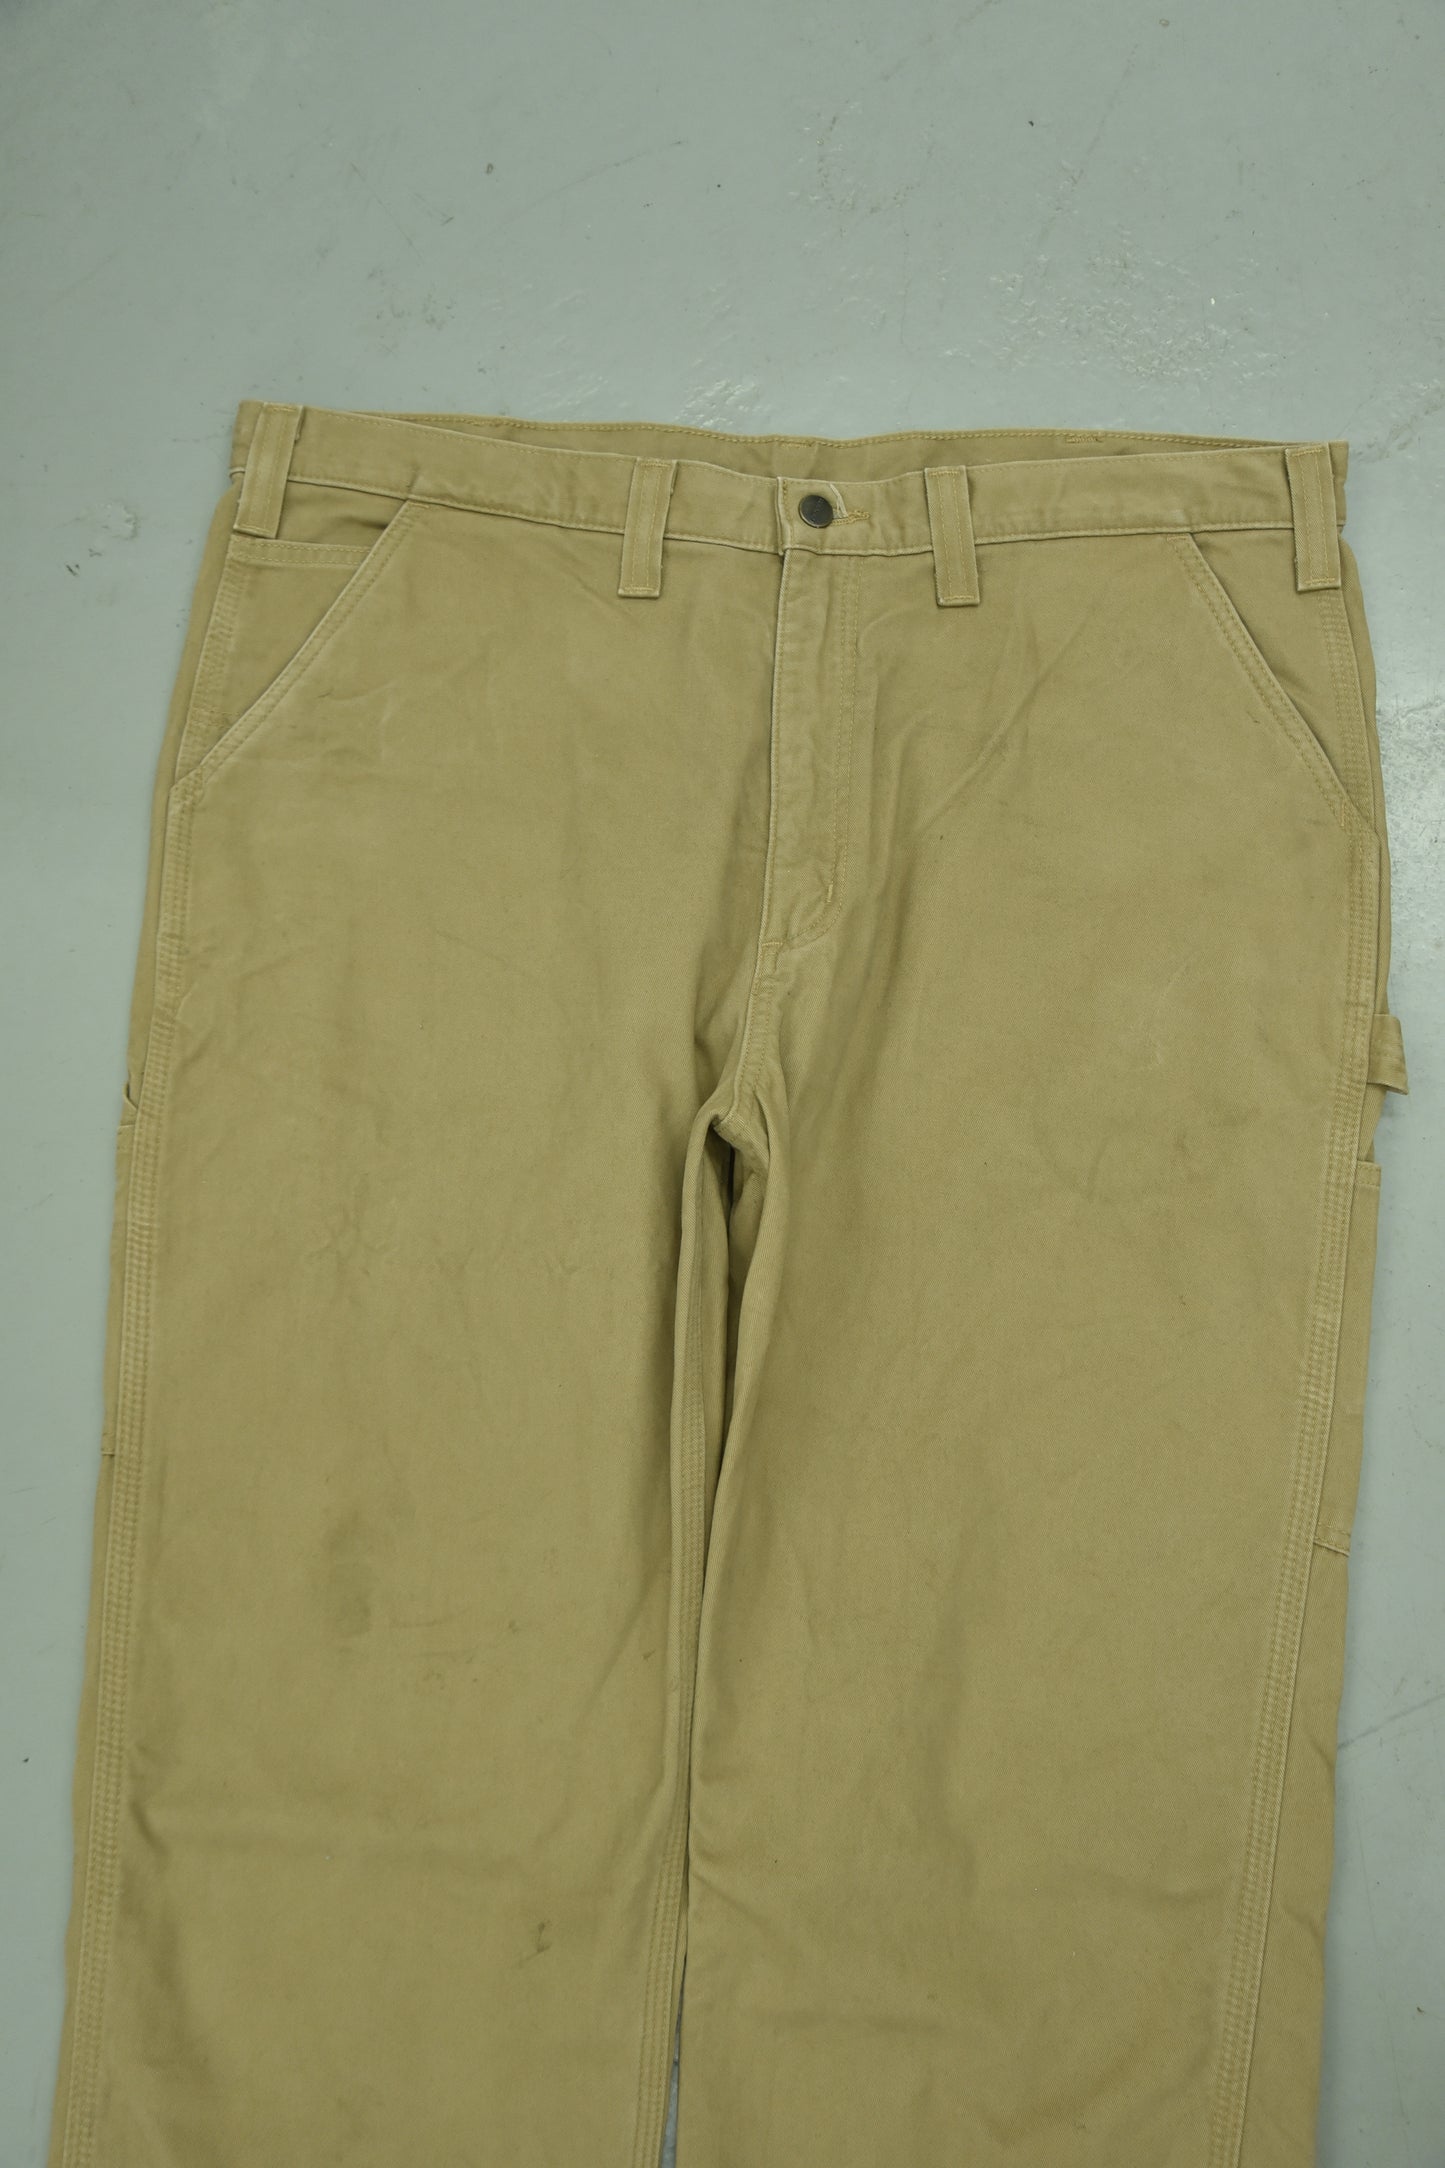 Carhartt Workwear Lined Pants Beige Vintage / 40x34